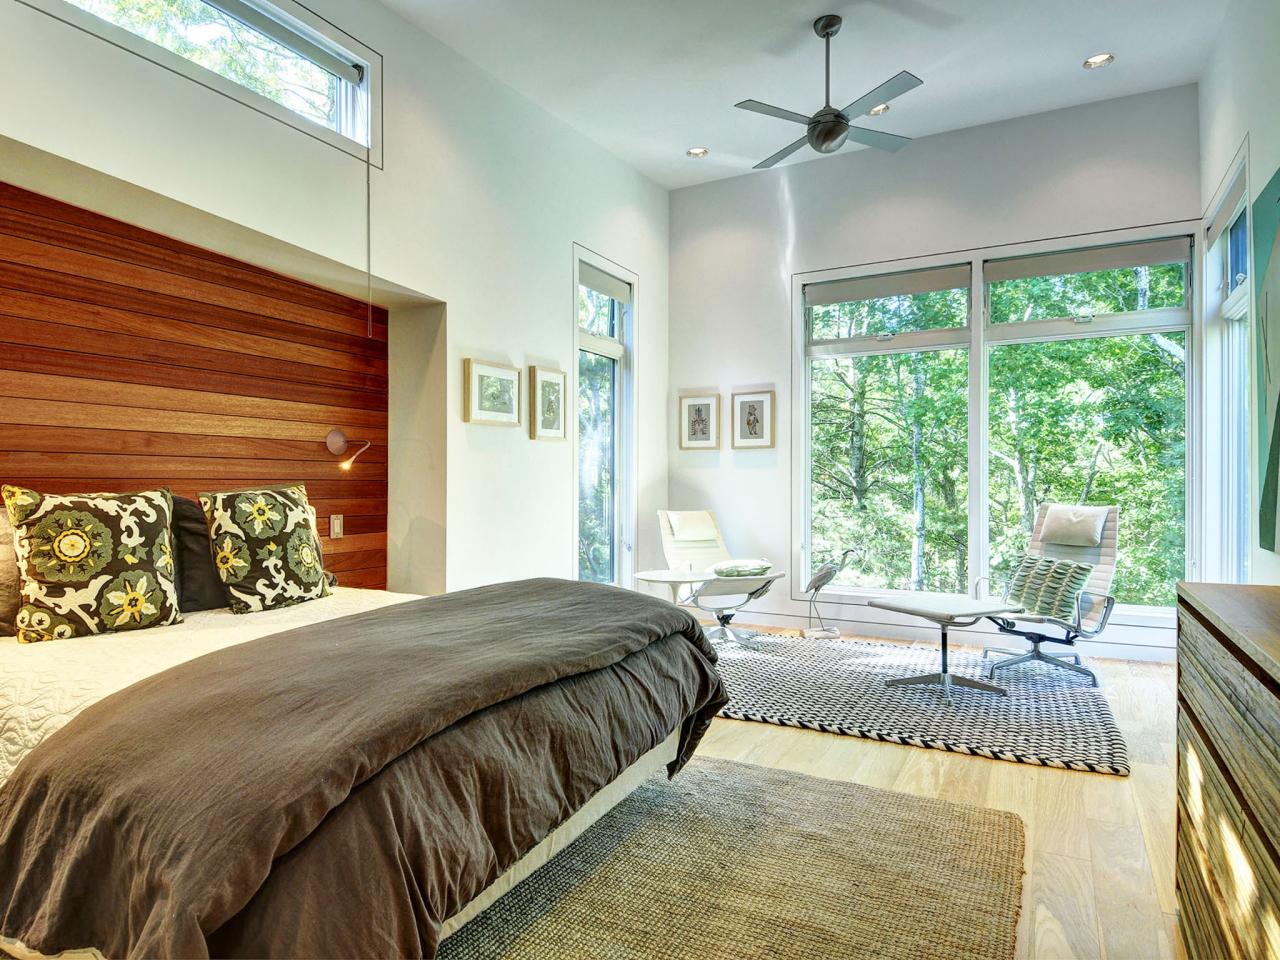 Serene Bedroom Designs   HGTV's Decorating & Design Blog   HGTV